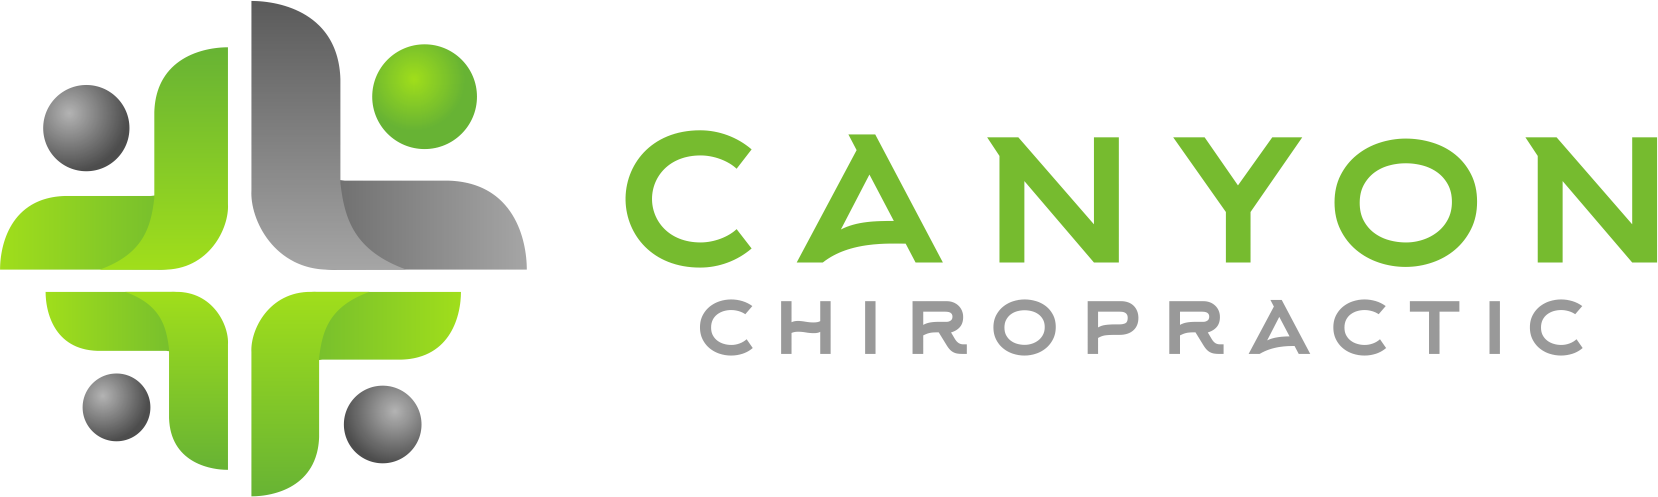 Canyon Chiropractic